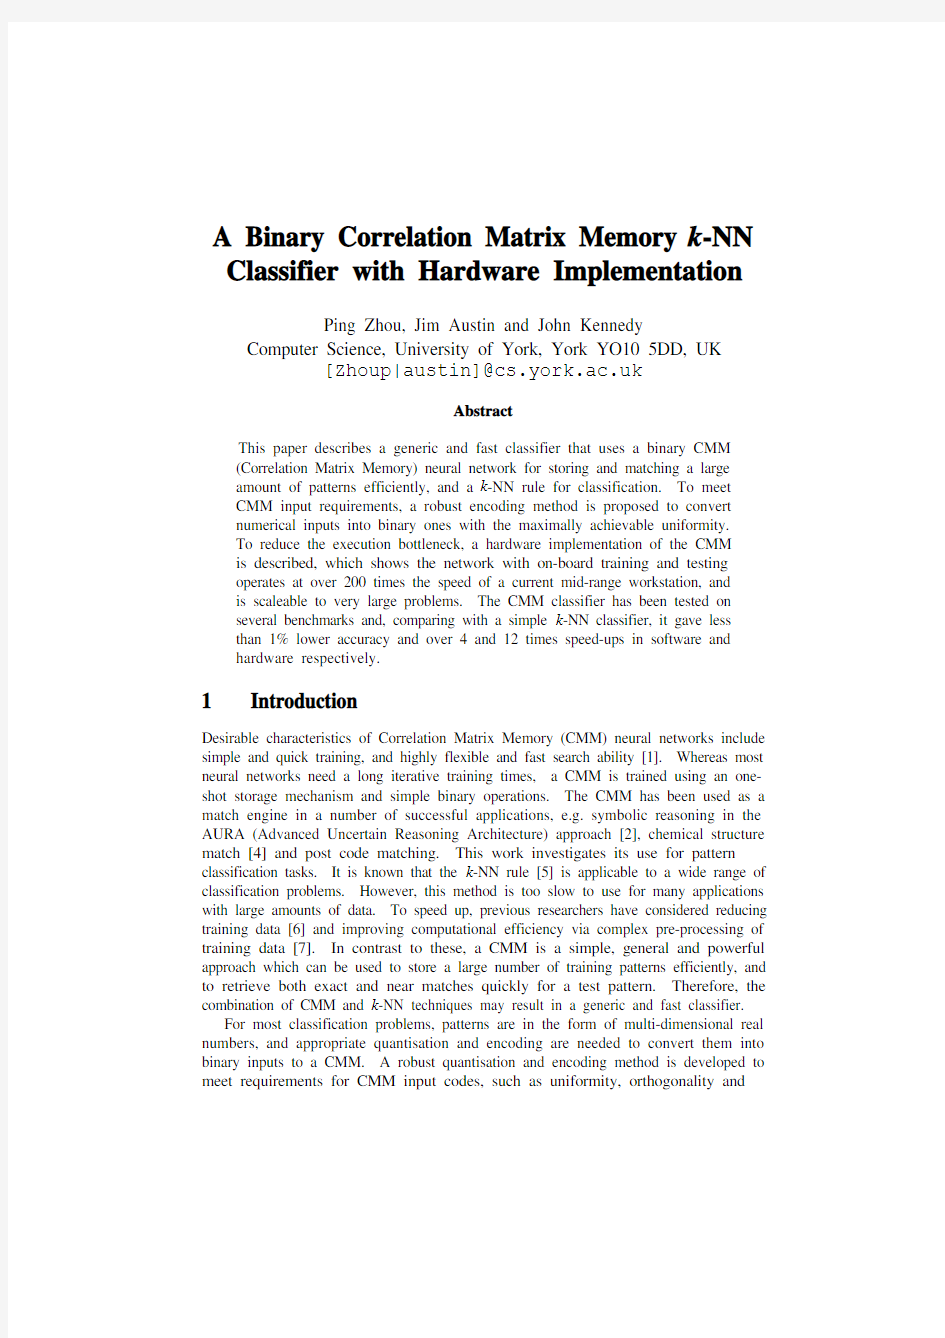 A binary correlation matrix memory k-nn classifier with hardware implementation